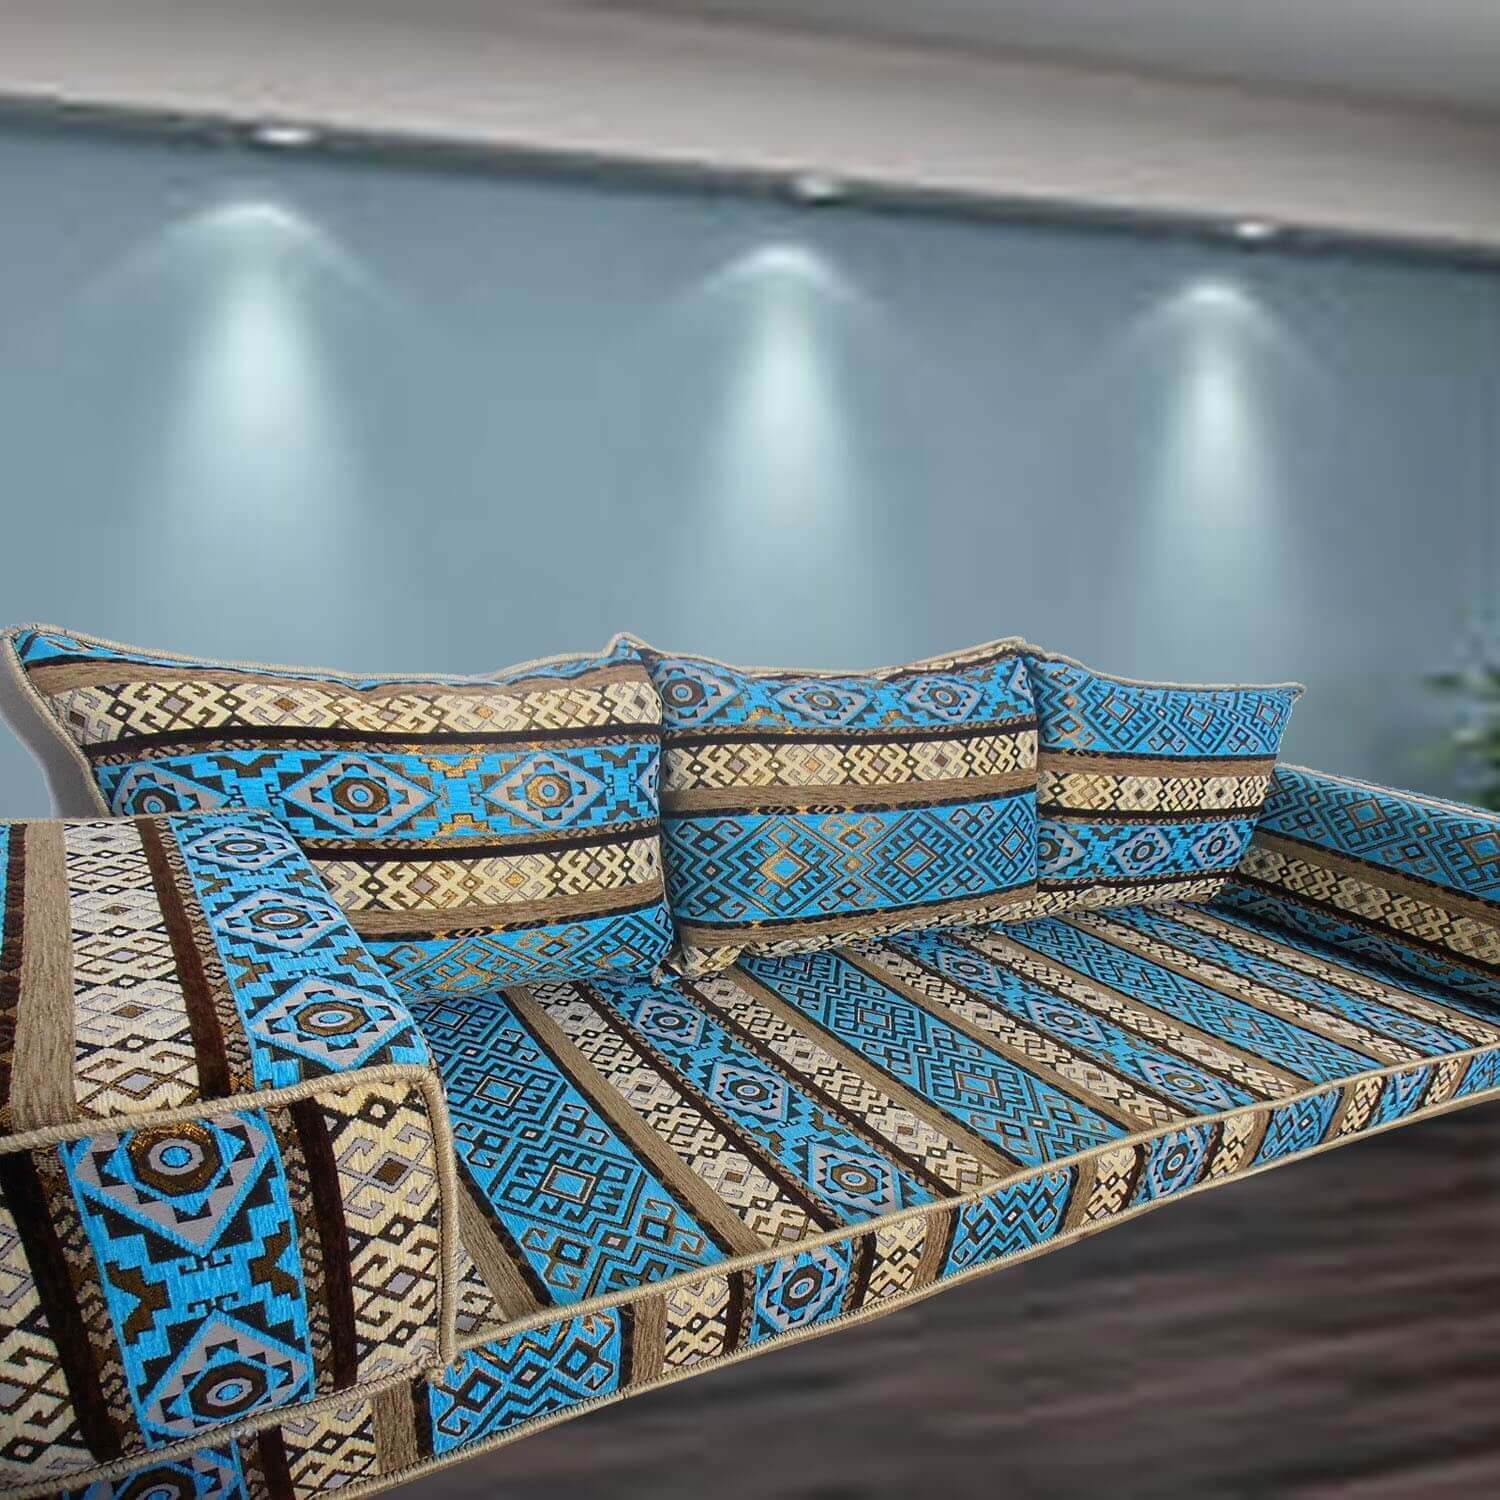 Turquoise-1 Three Seater Majlis Floor Sofa Couch